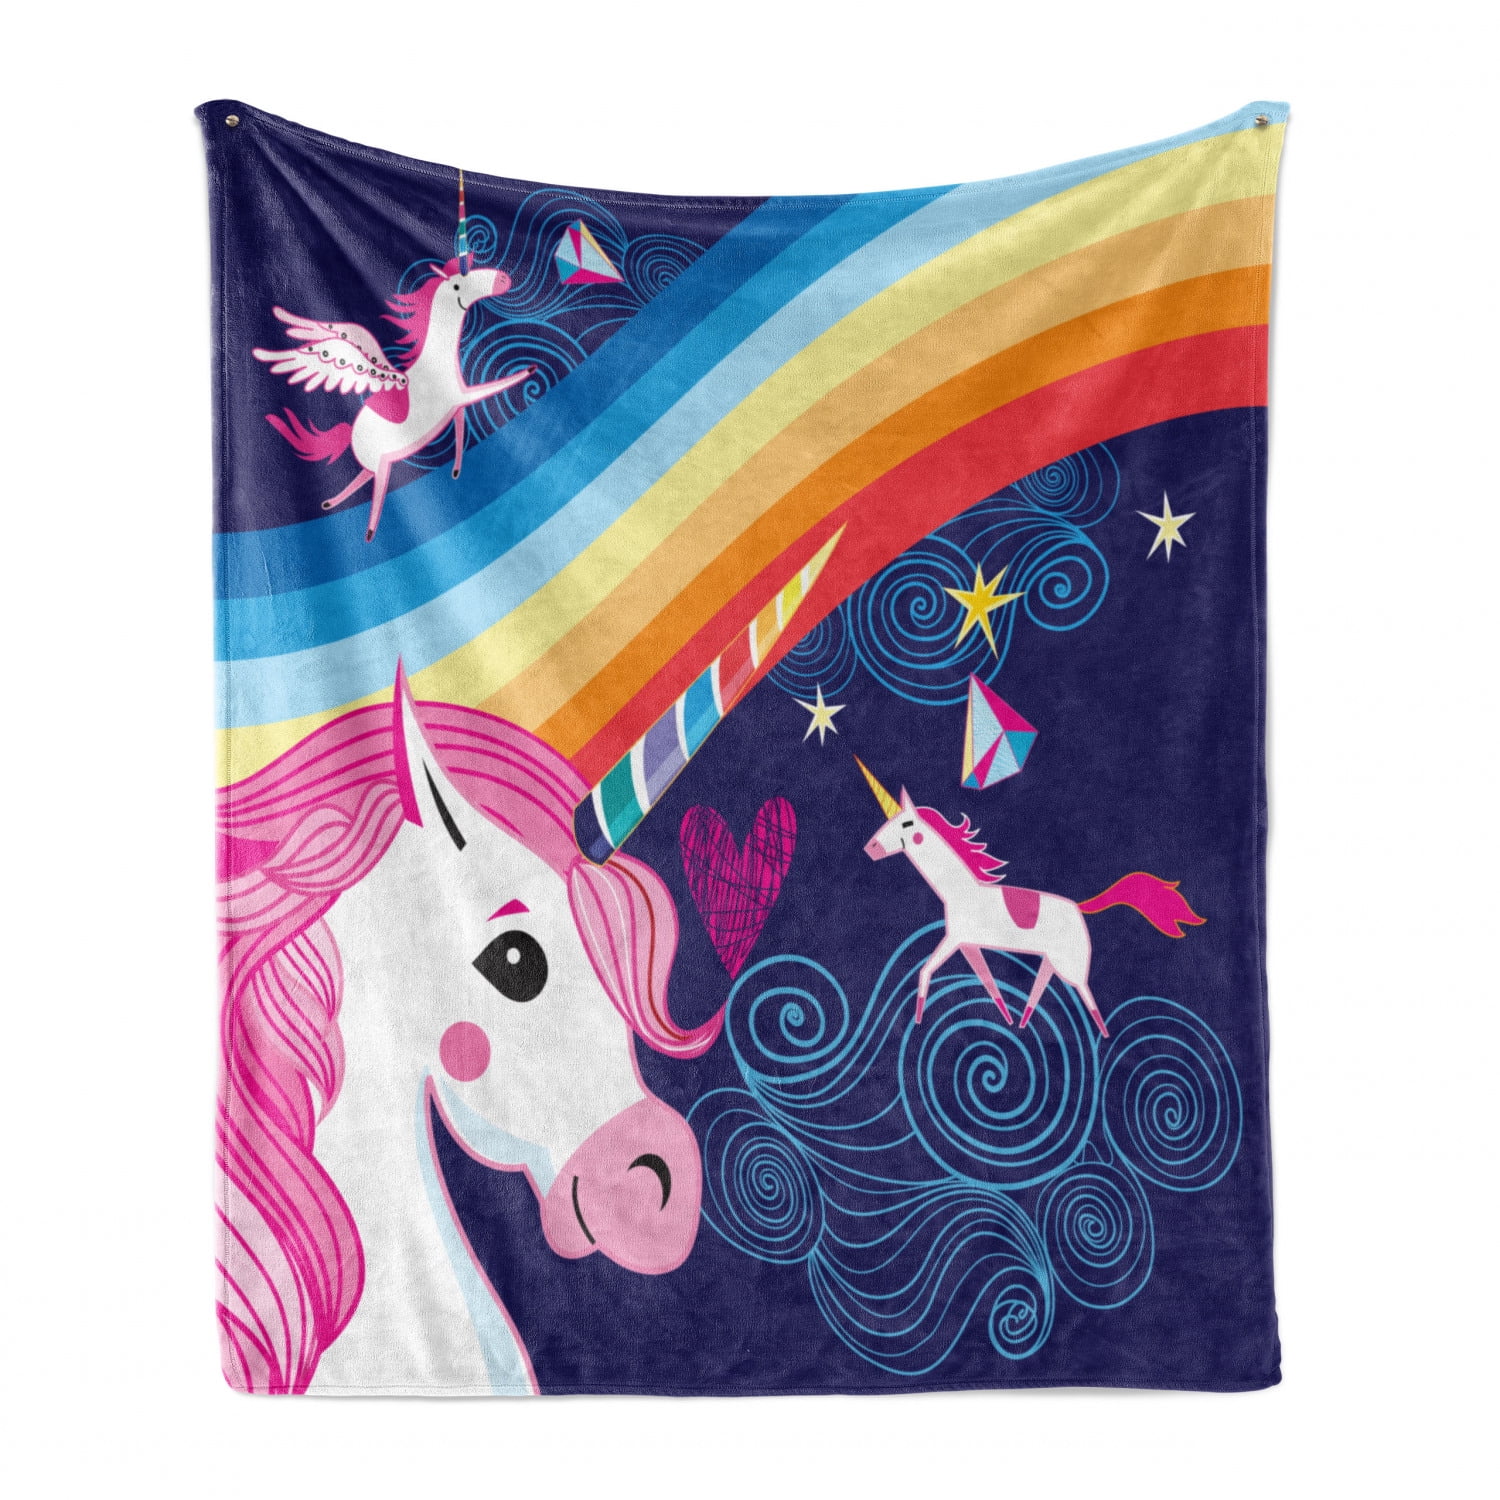 Soft Unicorn Blanket Fleece Throw For Girls Baby Kids Plush Cozy Horse 50x60 New 